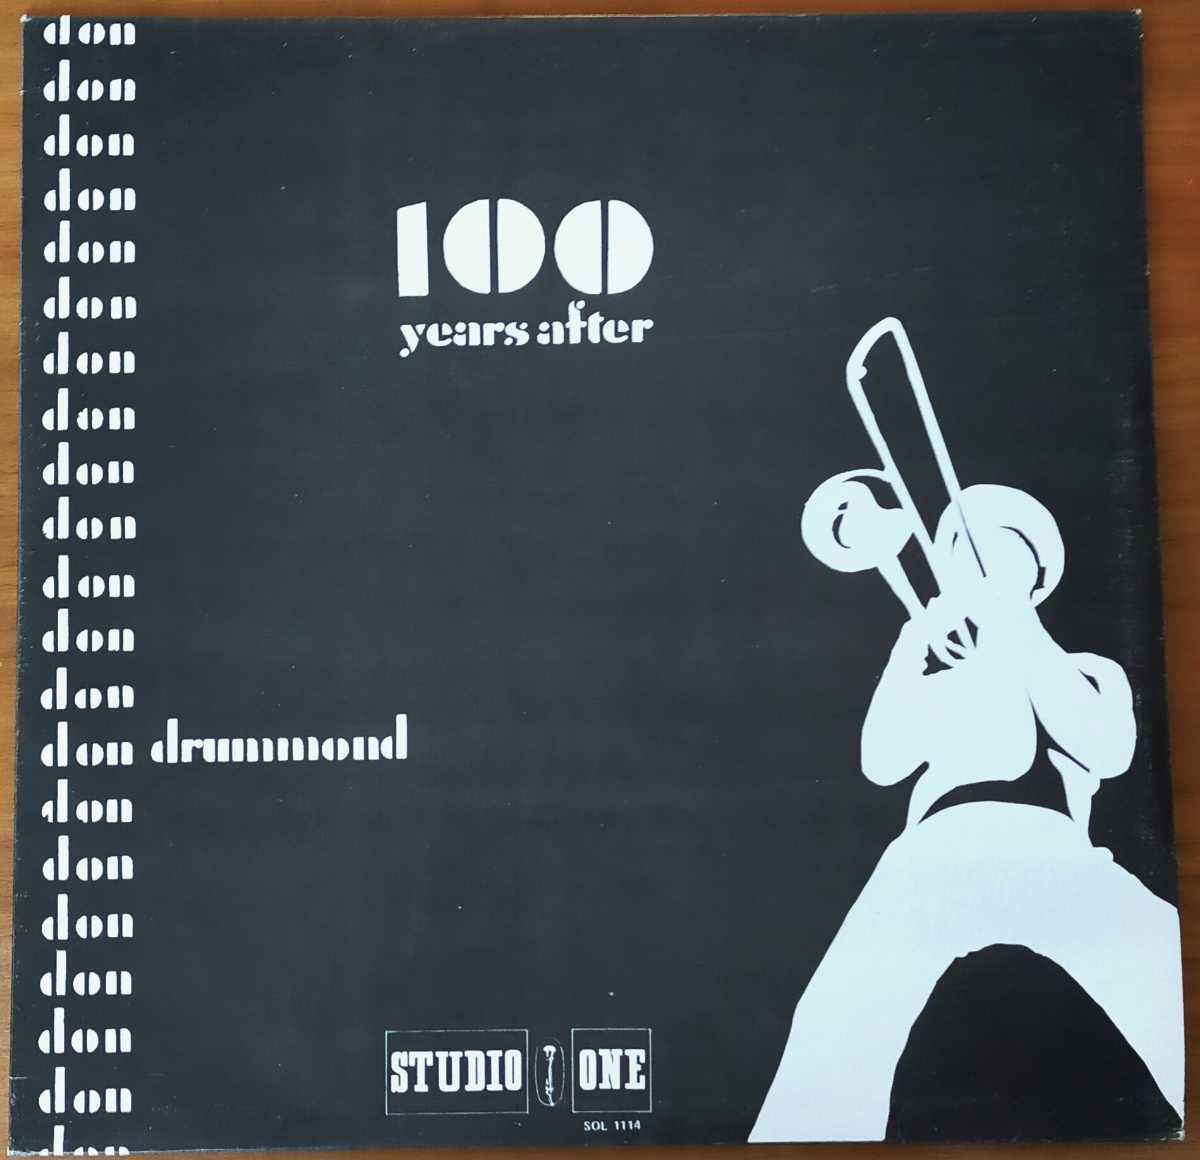 Don Drummond/100 years After/Ja.Studio One первый период Press /Skatalites